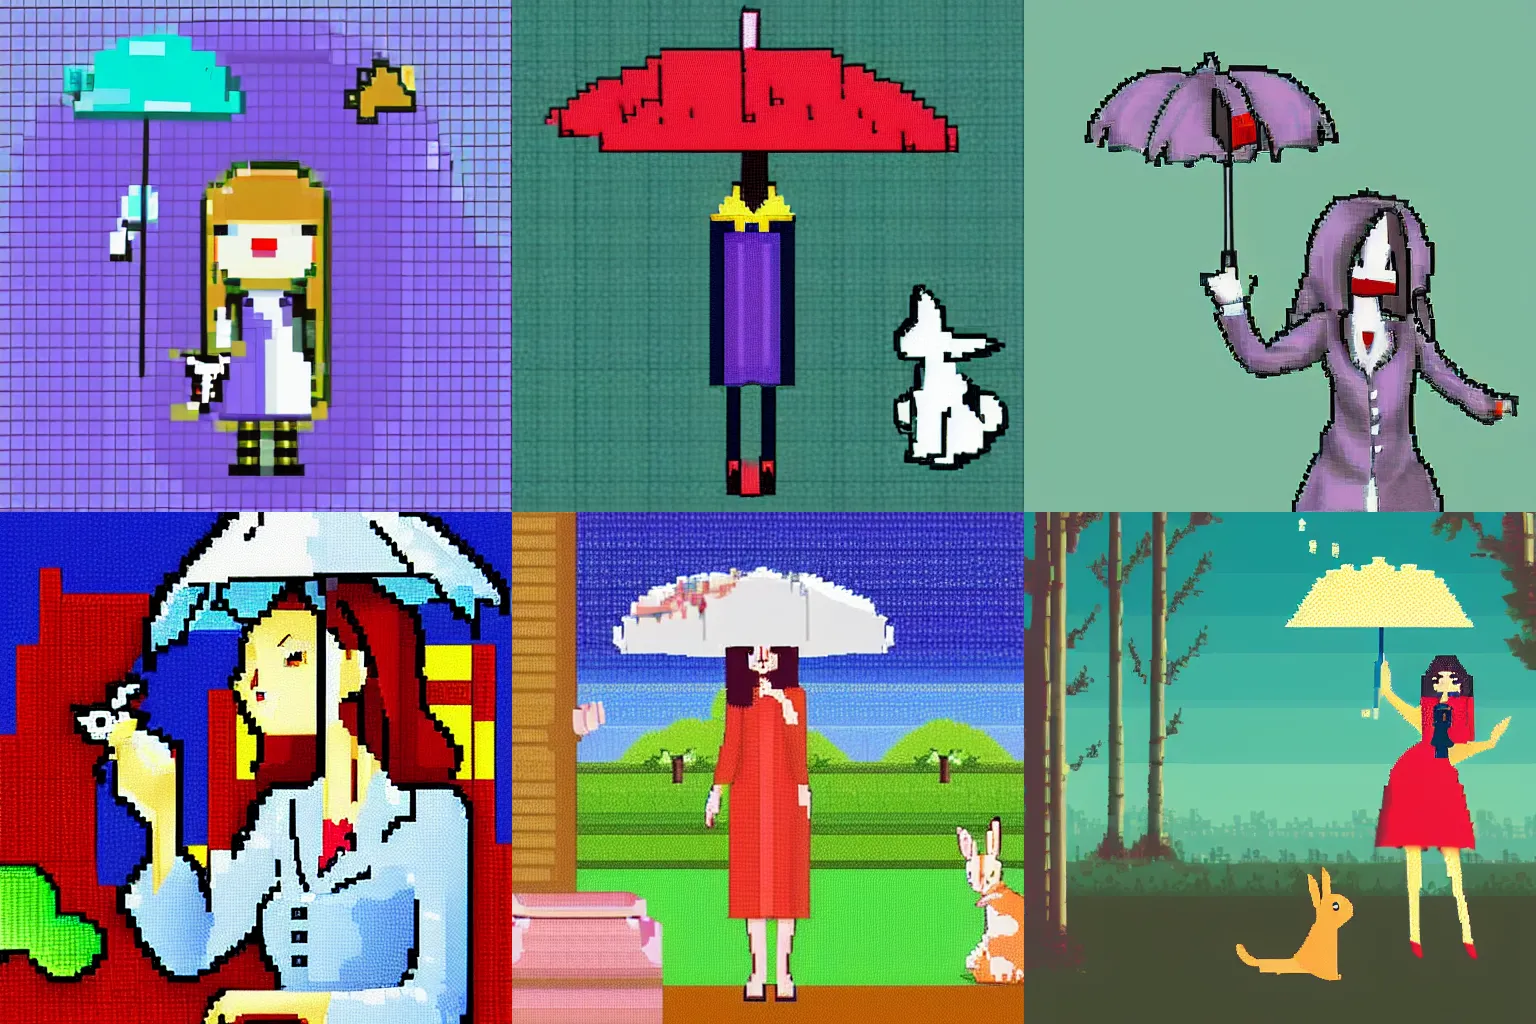 Prompt: A surreal dream scene of a woman holding an umbrella and a rabbit hiding inside it, 32-bit pixel art